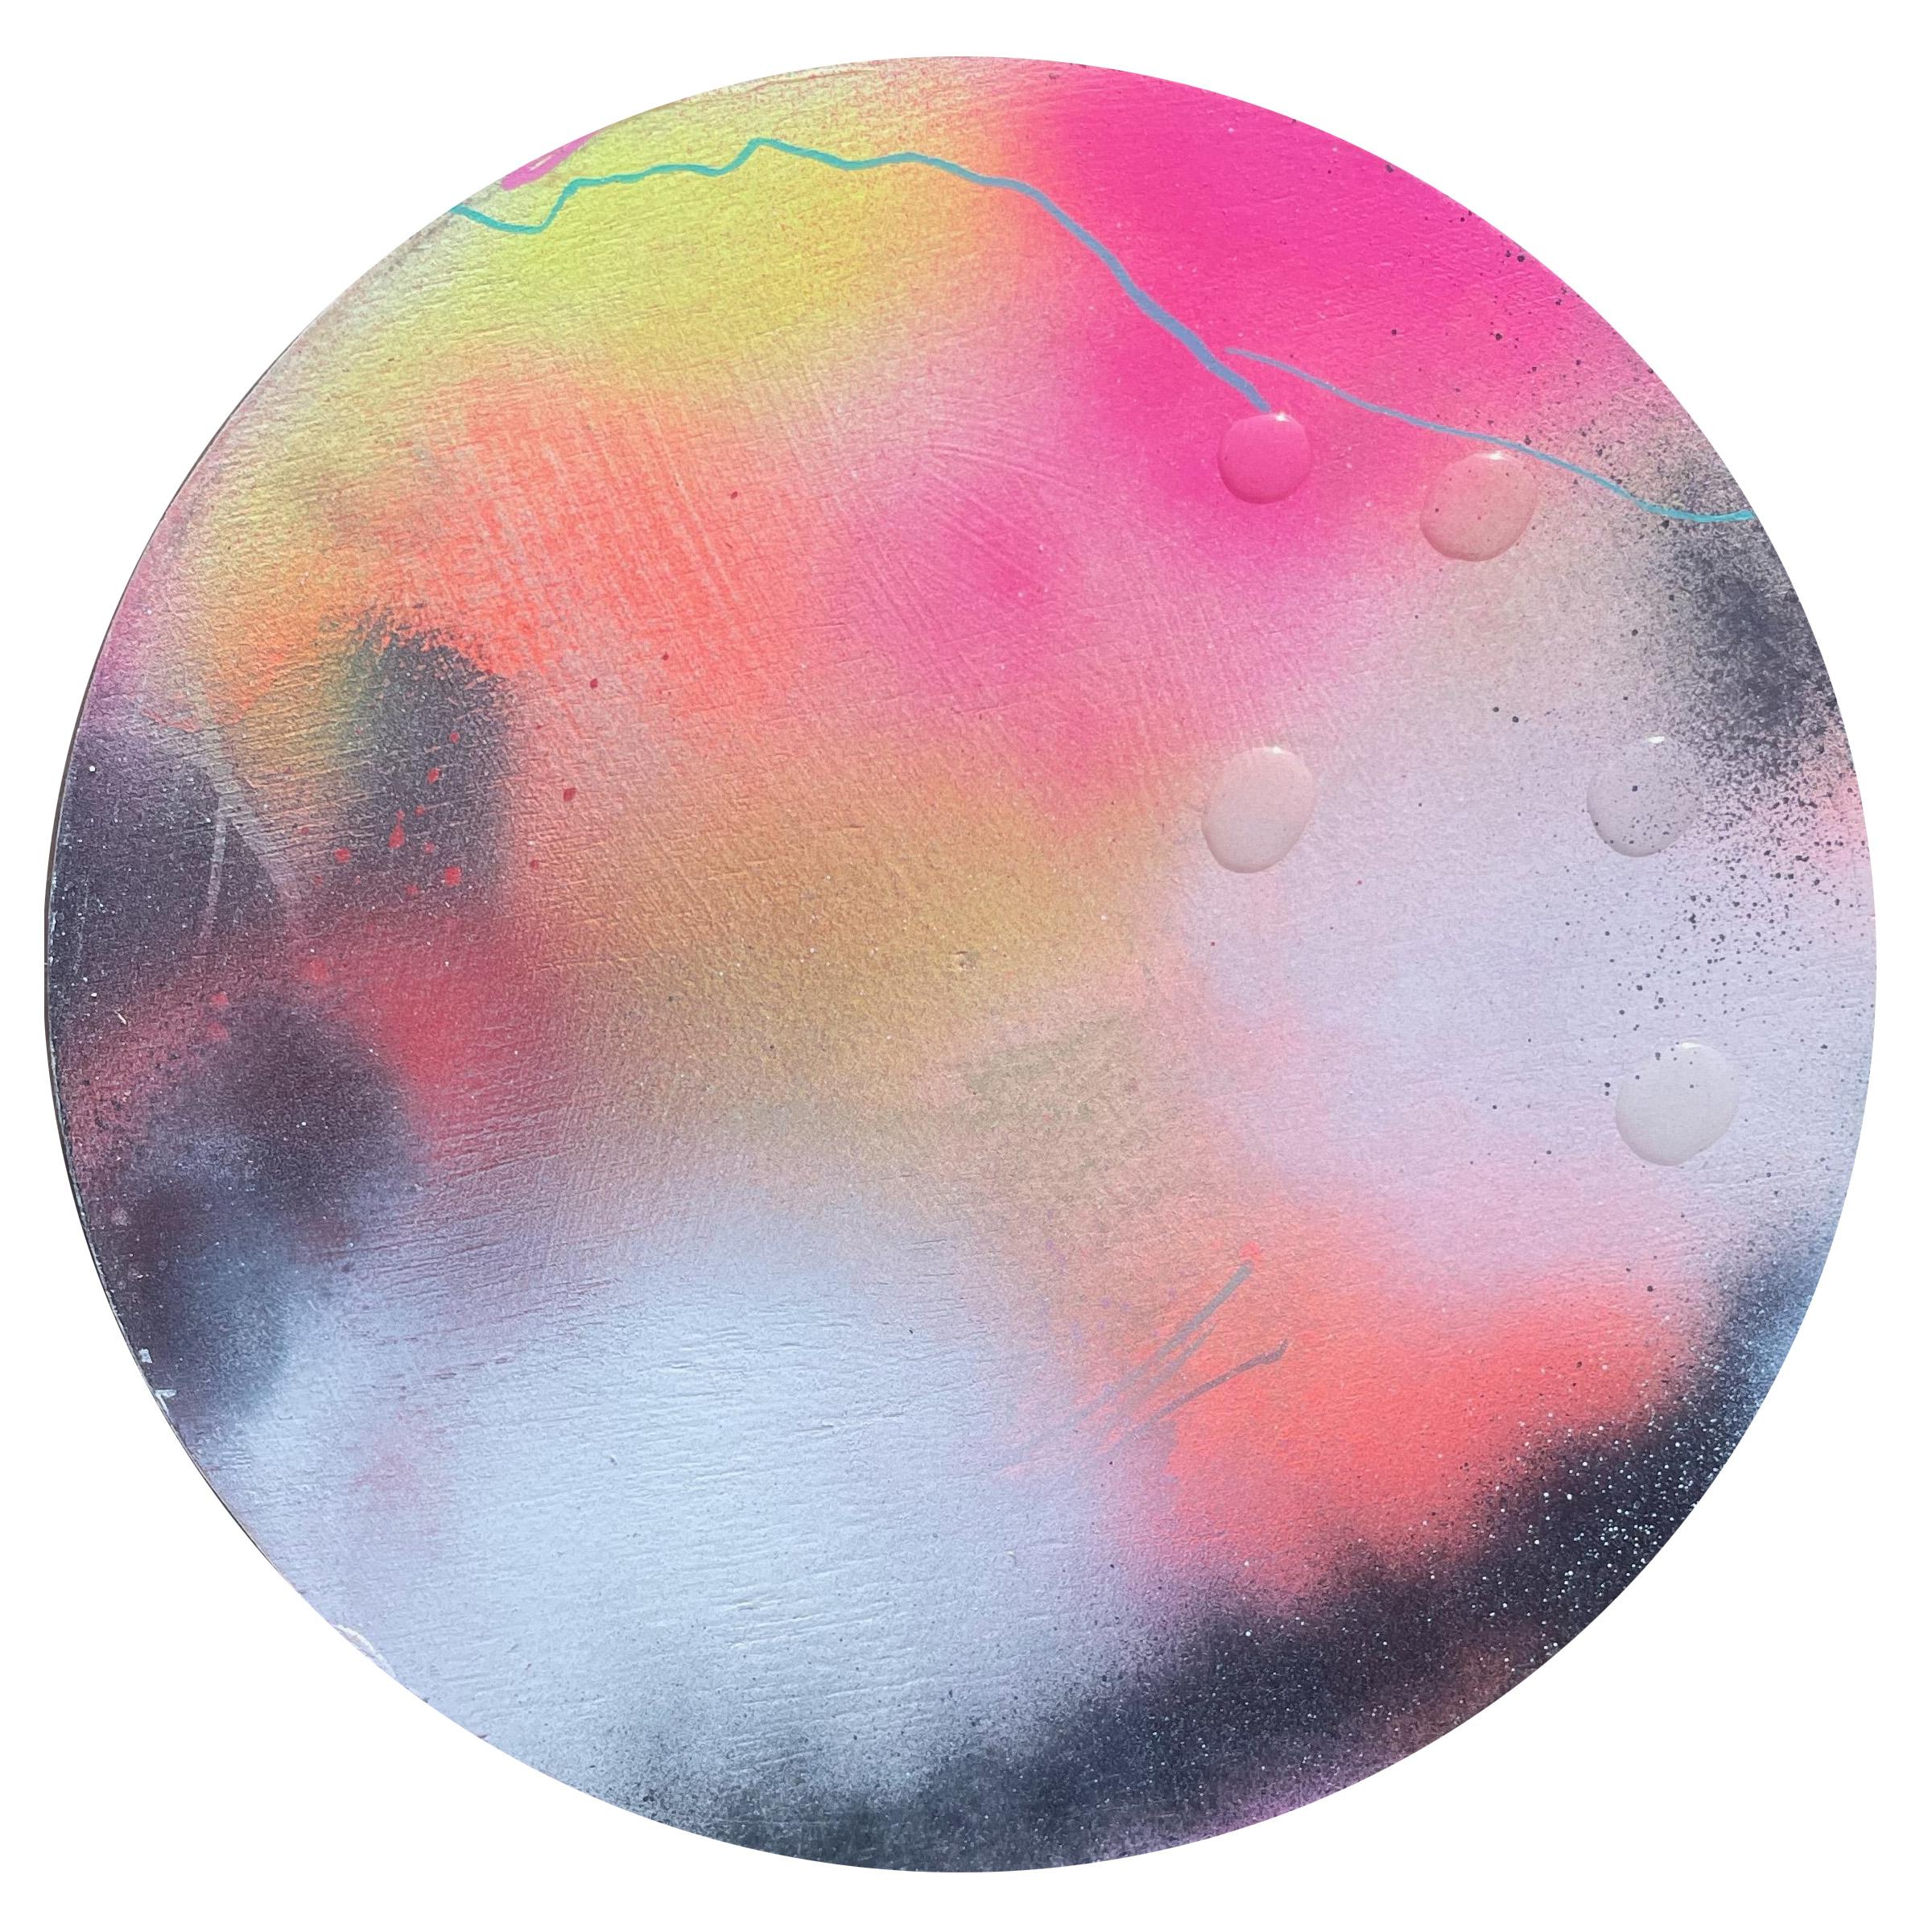 "Pearly Dewdrops 1" Contemporary Colorful Abstract Circular Painting - Mixed Media Art by David Hardaker